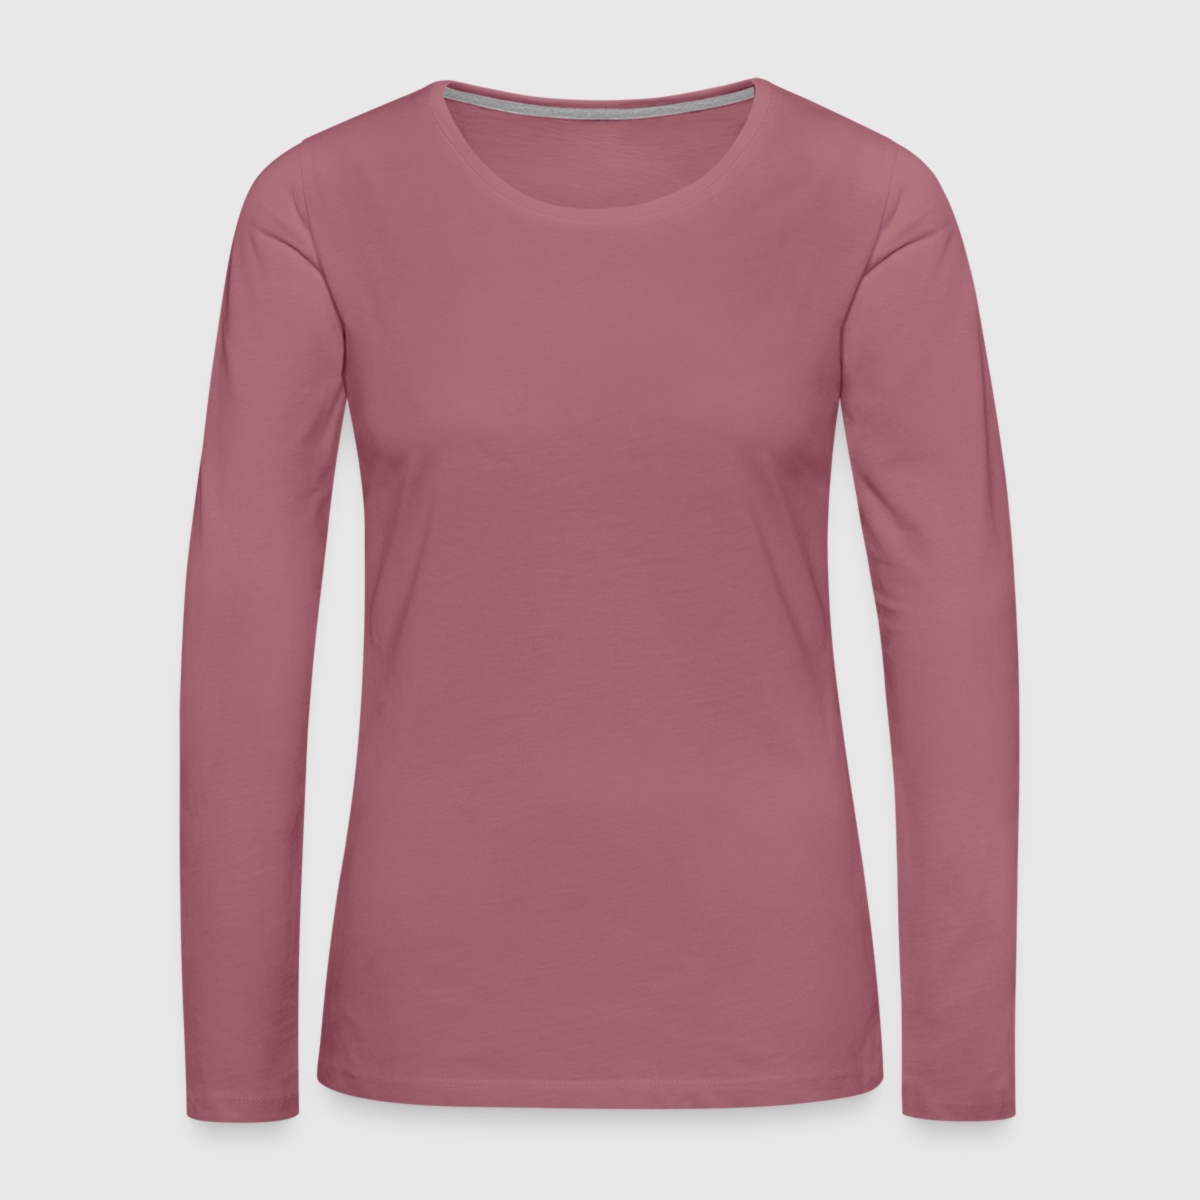 Women's Premium Longsleeve Shirt - Front